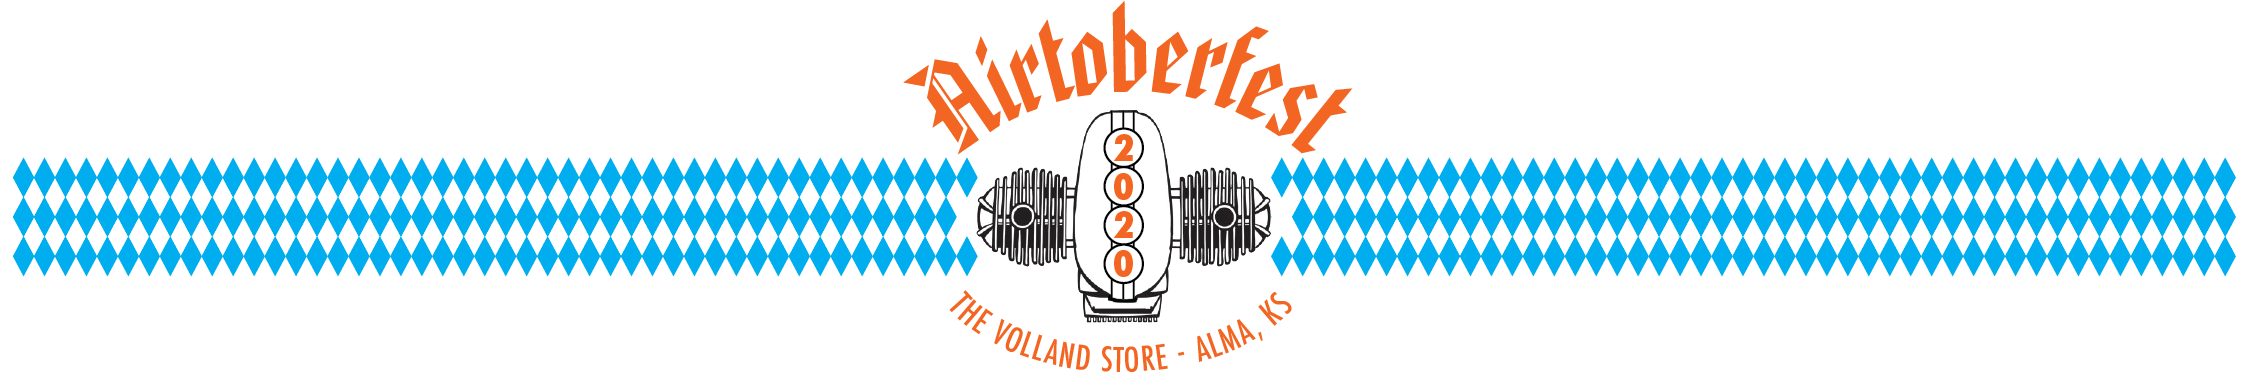 Airtoberfest 2020 Banner